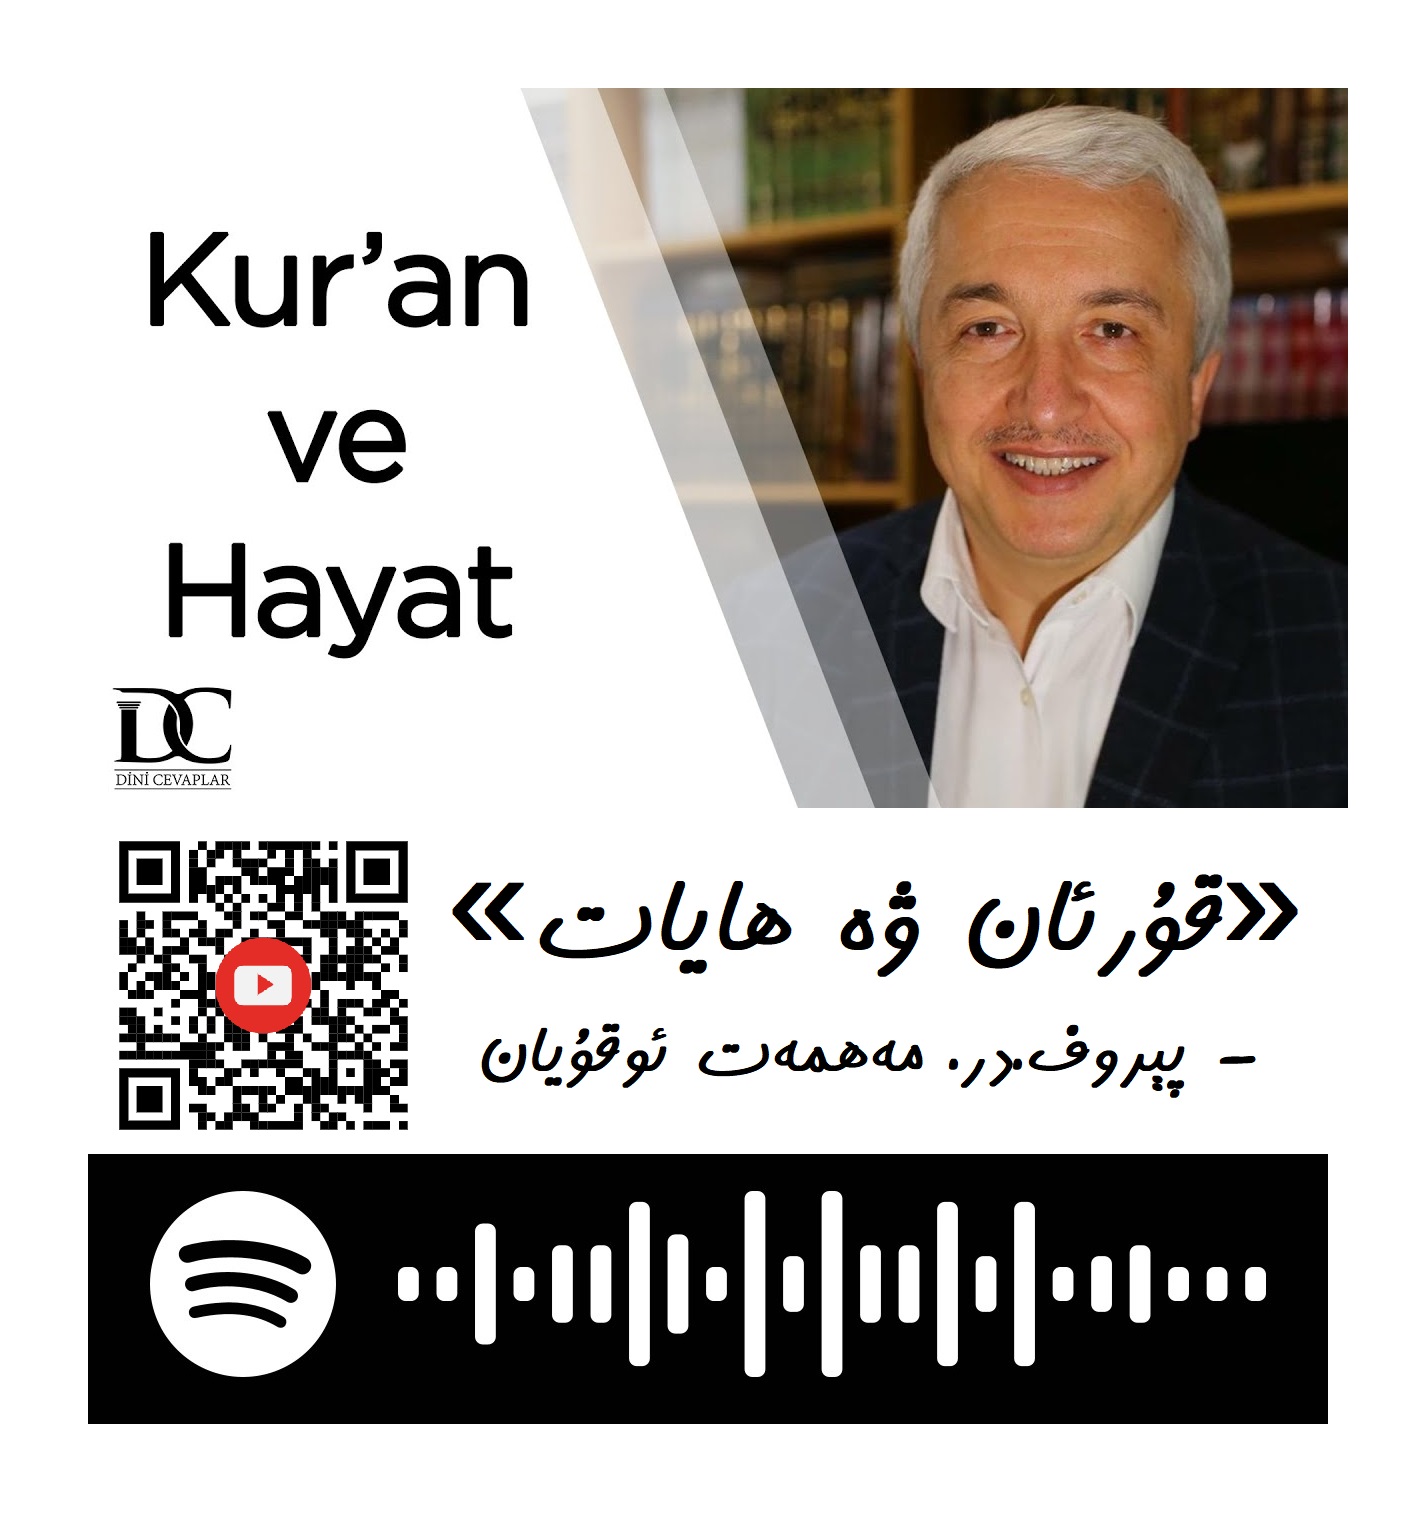 #Kur'an ve #Hayat _ Prof.Dr. #MehmetOkuyan قۇرئان# ۋە #ھايات» - پېروفېسسور دوكتور مەھمەت #ئوقۇيان»" by #Tedbiryay #تەدبىرياي. https://open.spotify.com/episode/0VZ2lIRY3a0NmvAJqq1Vqu?si=6bd026f8cbbe4b69 https://podcasters.spotify.com/pod/show/tedbiryay/episodes/Kuran-ve-Hayat-_-Prof--Dr--Mehmet-Okuyan------e239vc6 https://youtu.be/aTJ7HlguaUc #دىنىي #جاۋاپلار #قۇرئان_ۋە_ھايات #قۇرئان #تۇرمۇش #Dinicevaplar #DinveHayat